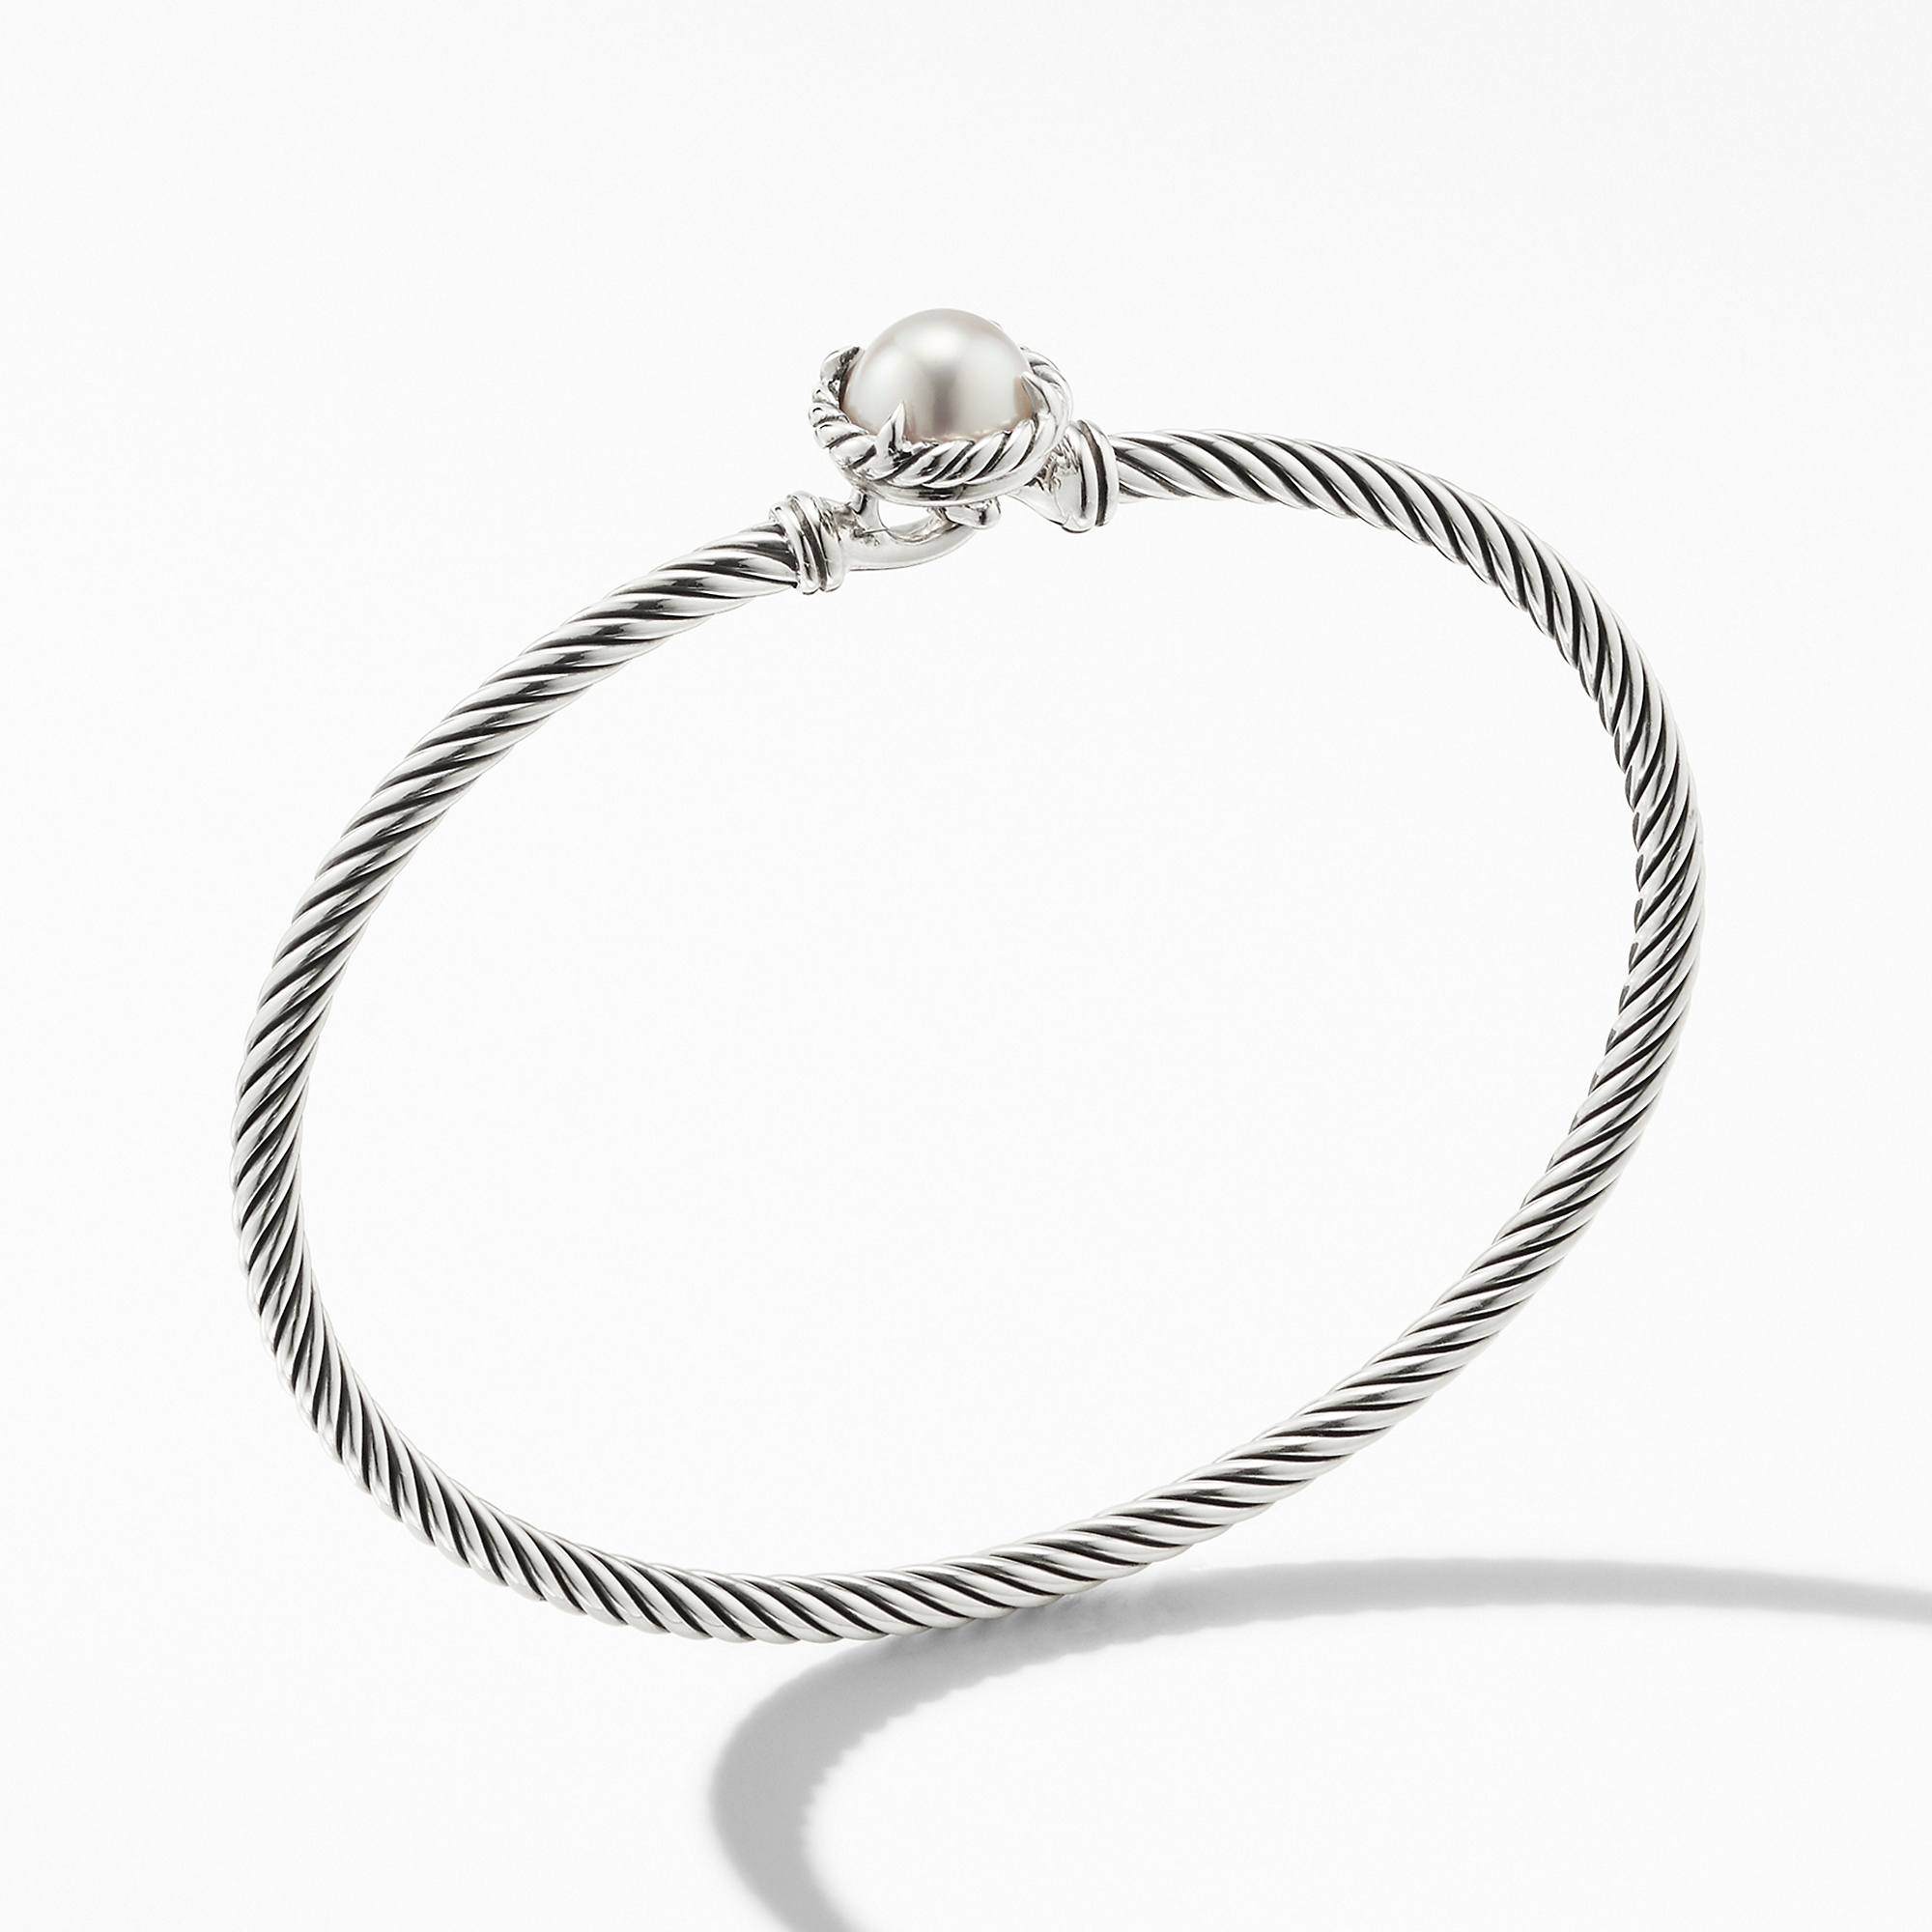 David Yurman Chatelaine Bracelet with Pearls 0